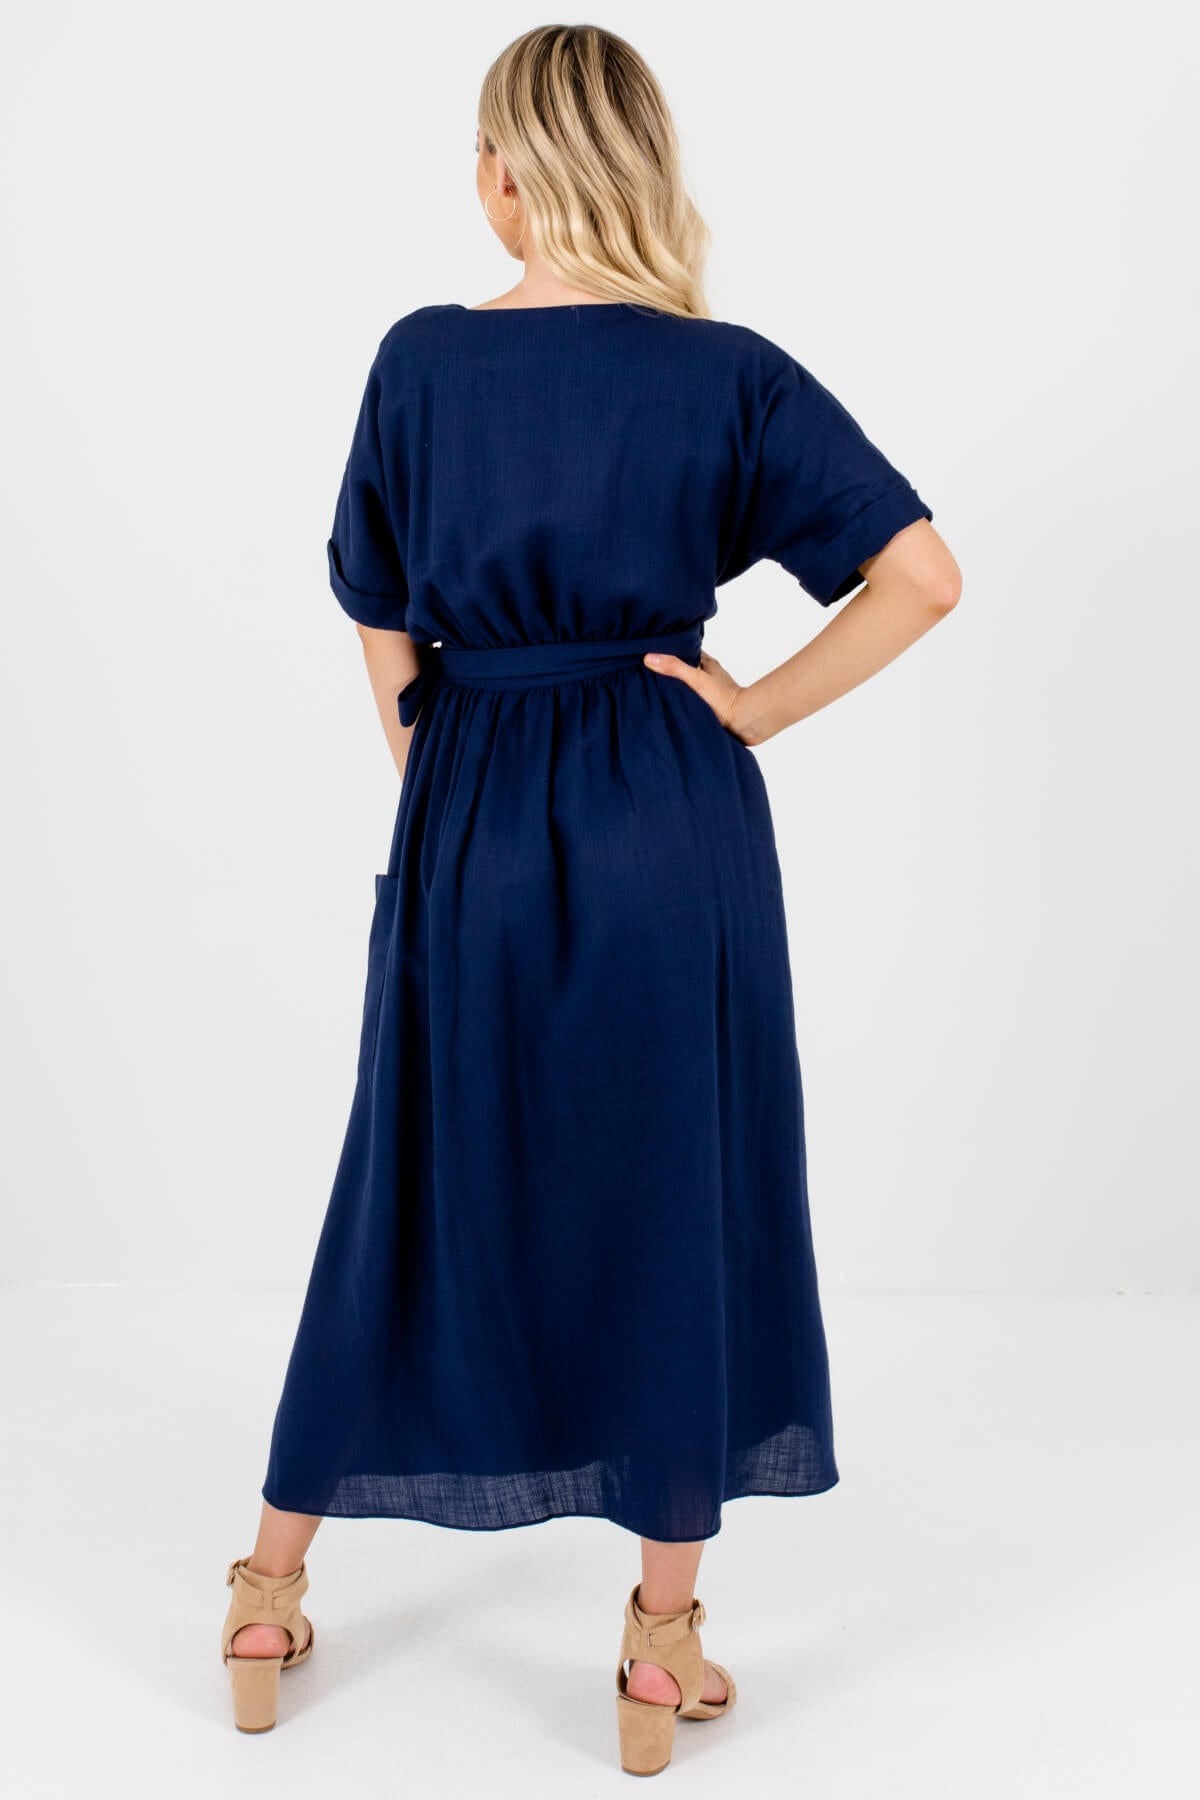 Dark Navy Blue Wrap Maxi Dresses Affordable Online Boutique